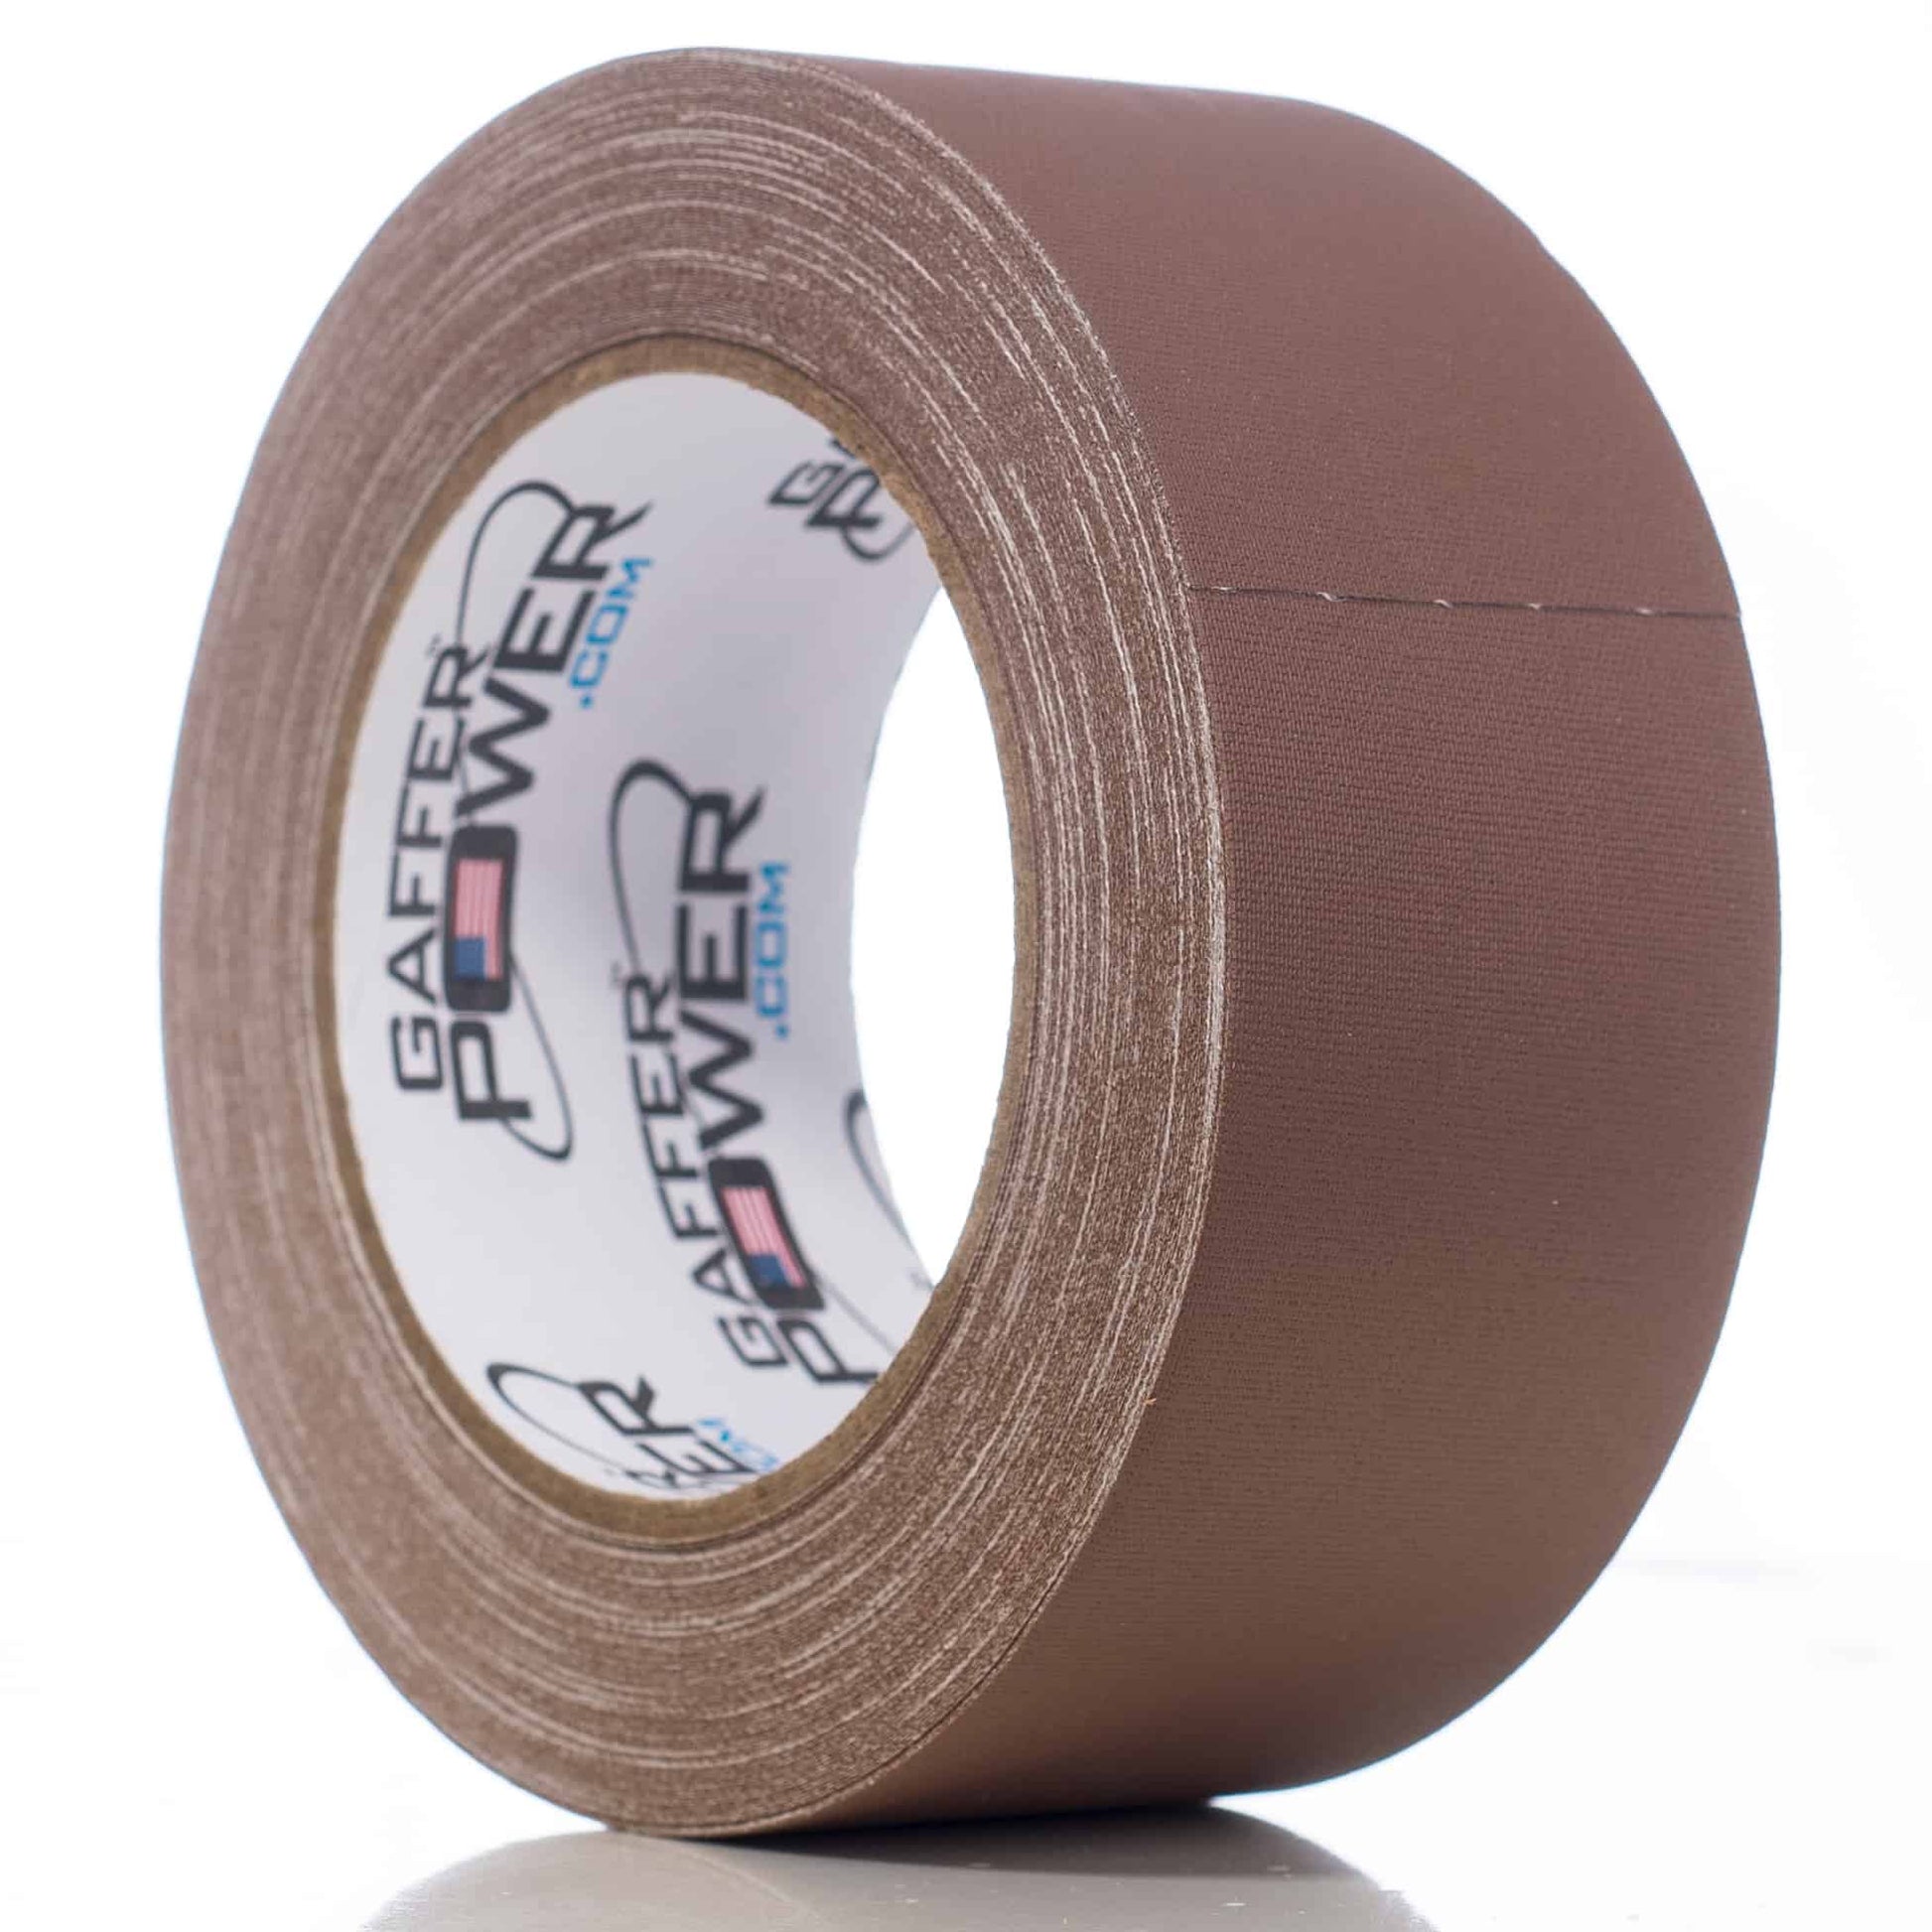 Buy 3M Premium fabric adhesive tape 389